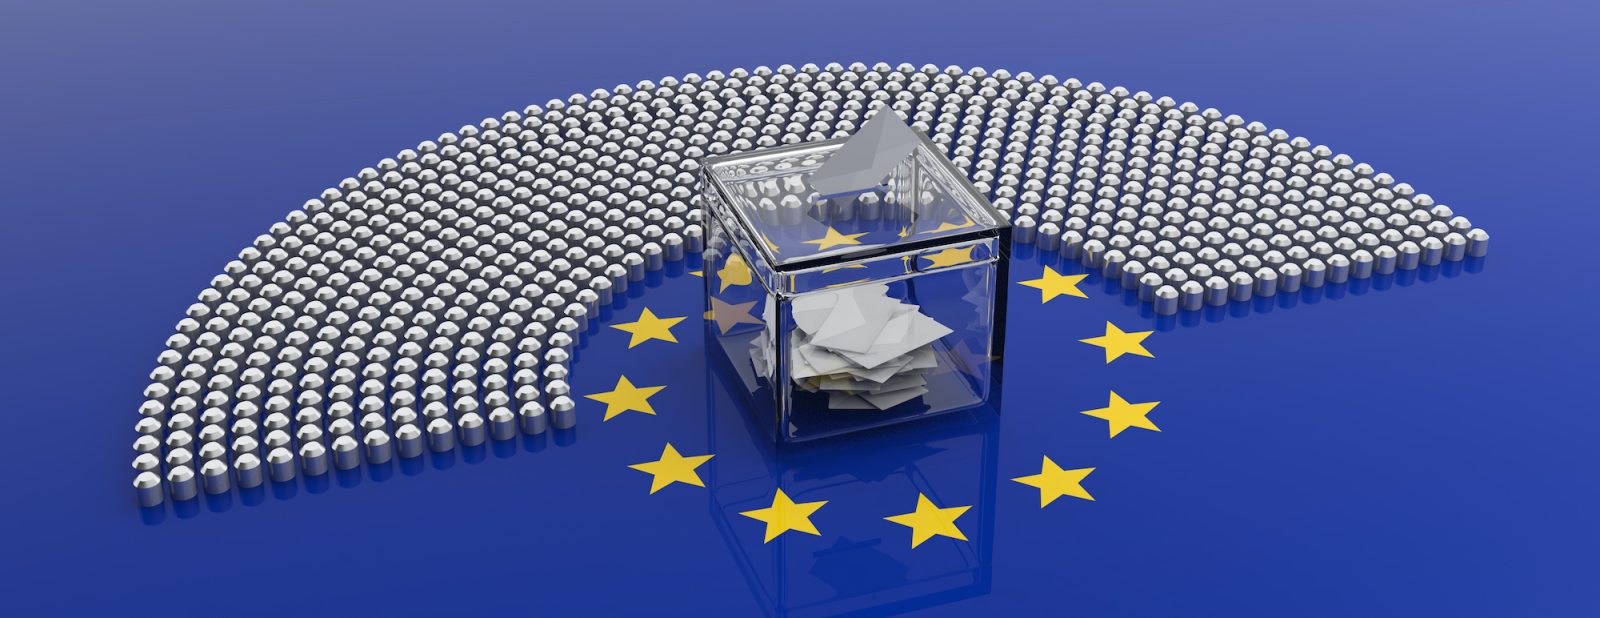 H πολιτική αντιπαράθεση στον δρόμο προς τις ευρωεκλογές, μειώνει τη διάθεση ανάληψης επενδυτικού ρίσκου